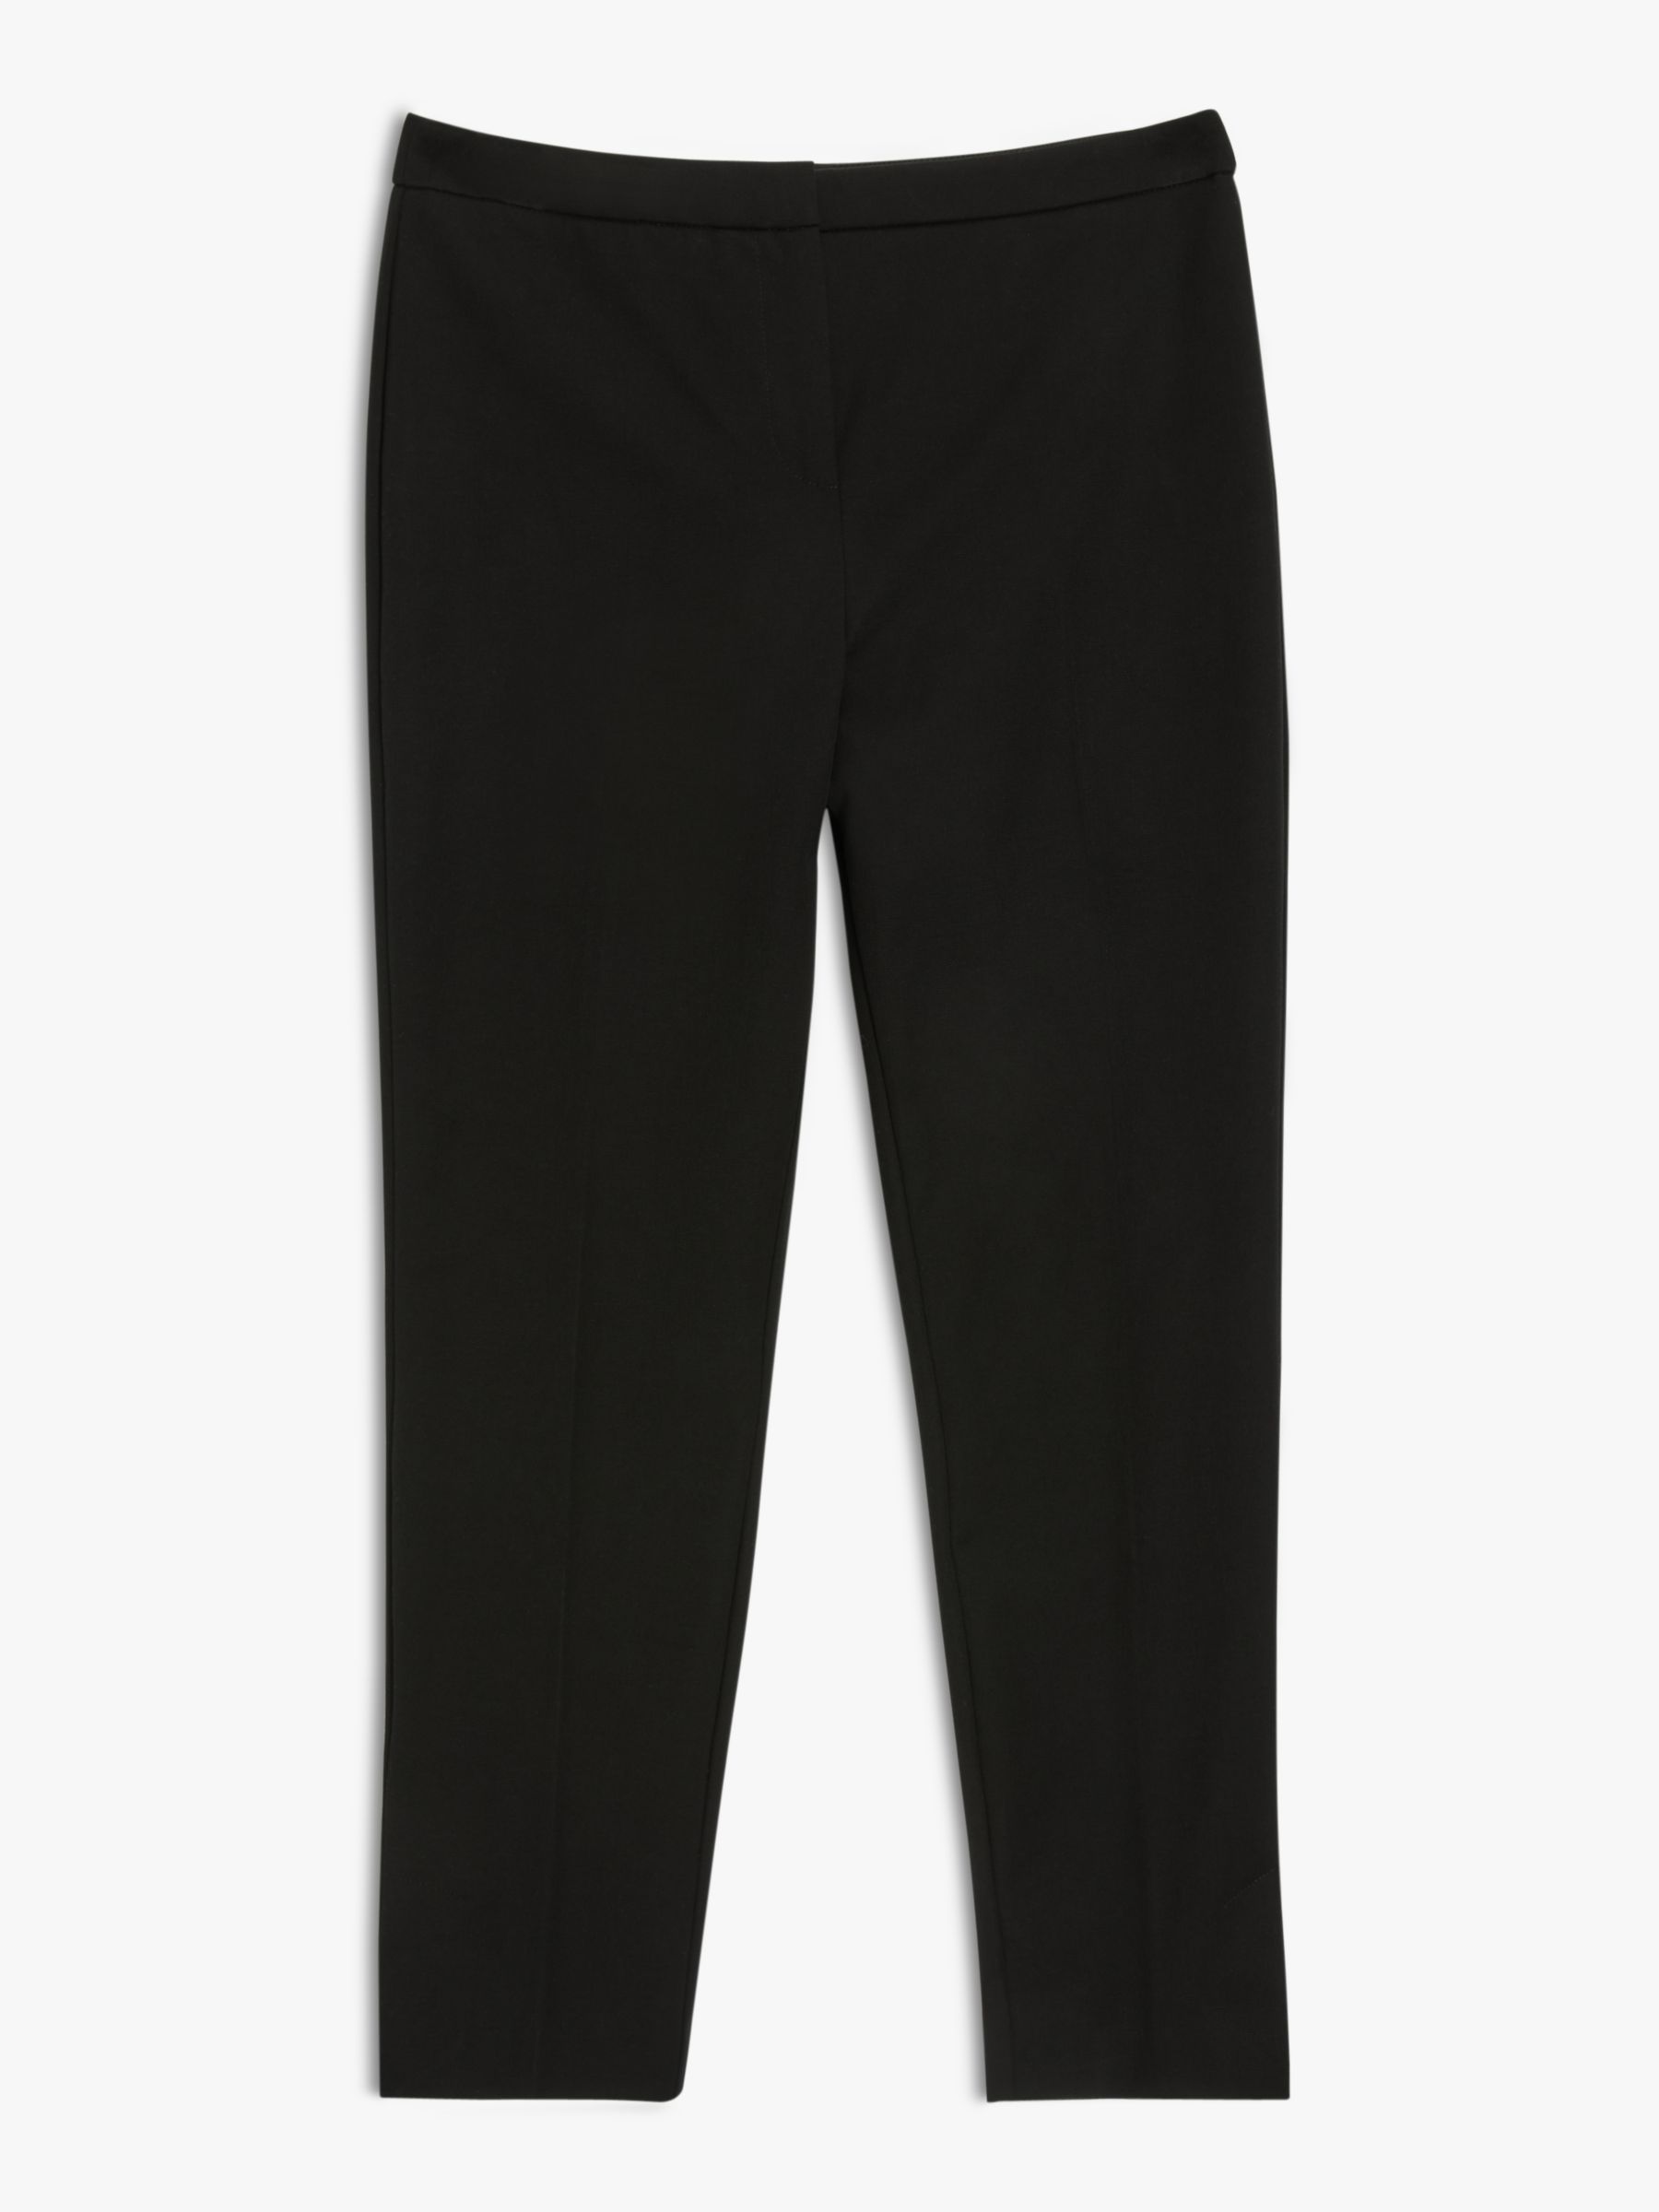 John Lewis Slim Bi-Stretch Trousers, Black, 8